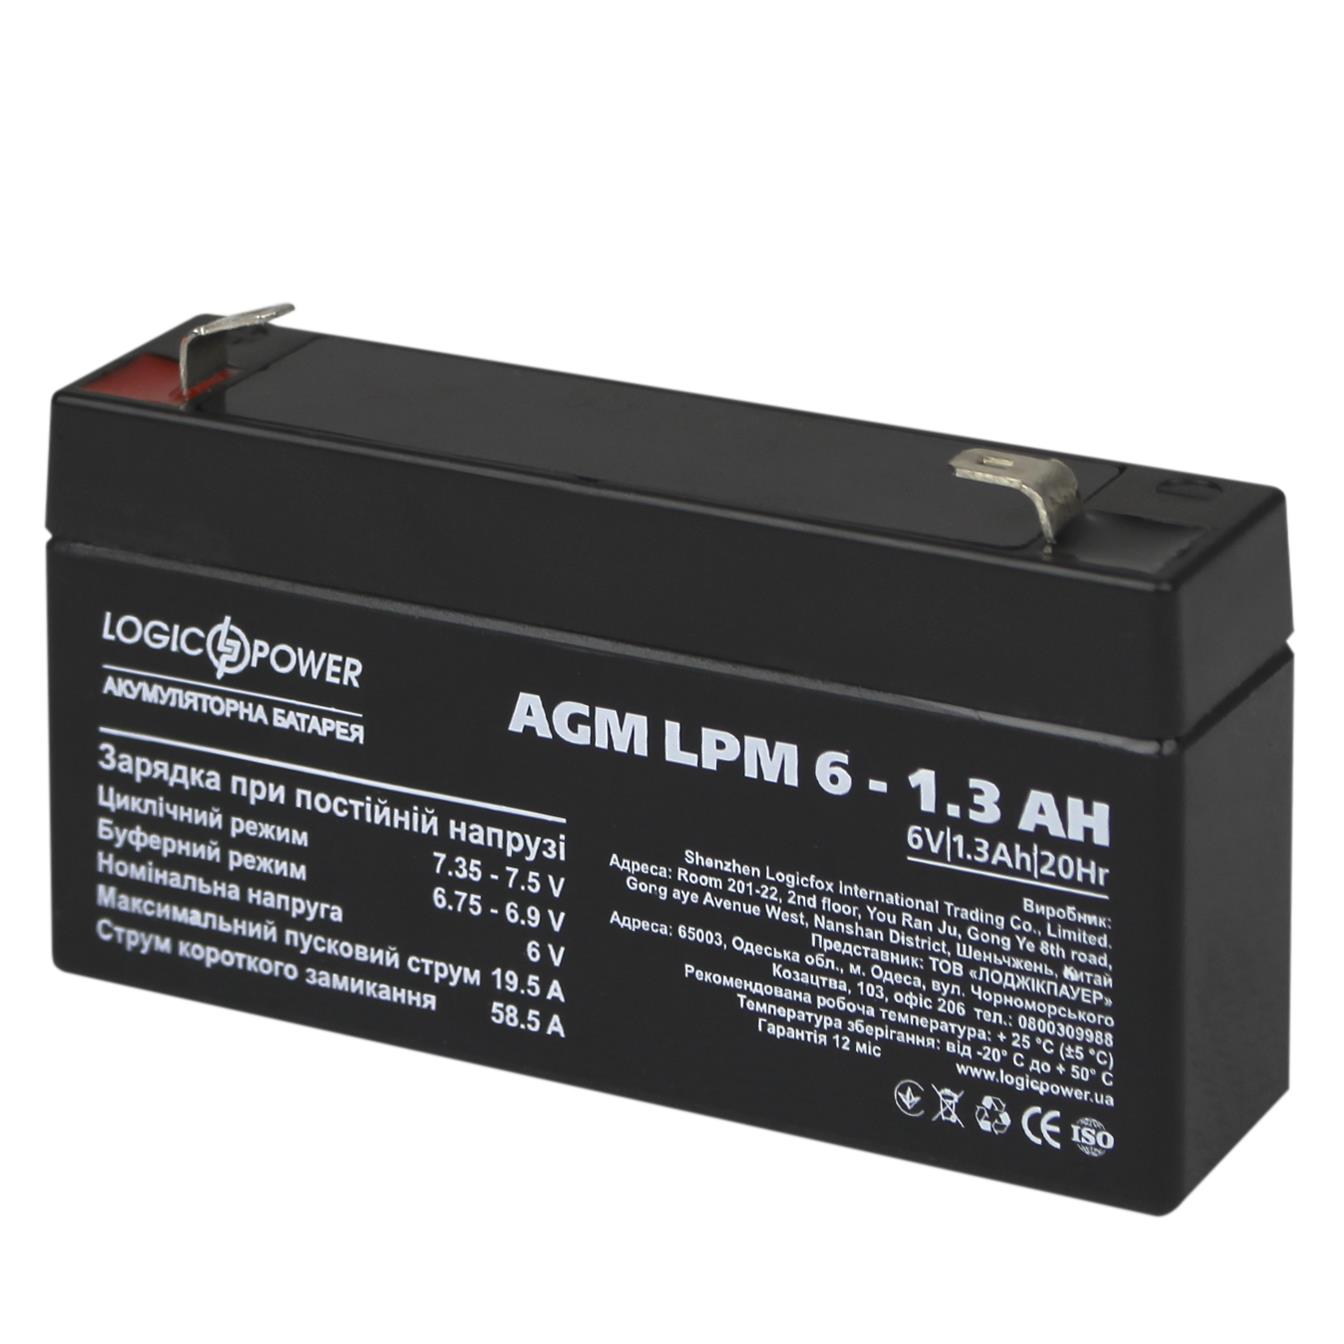 Характеристики аккумулятор свинцово-кислотный LogicPower AGM LPM 6V - 1.3 Ah (4157)